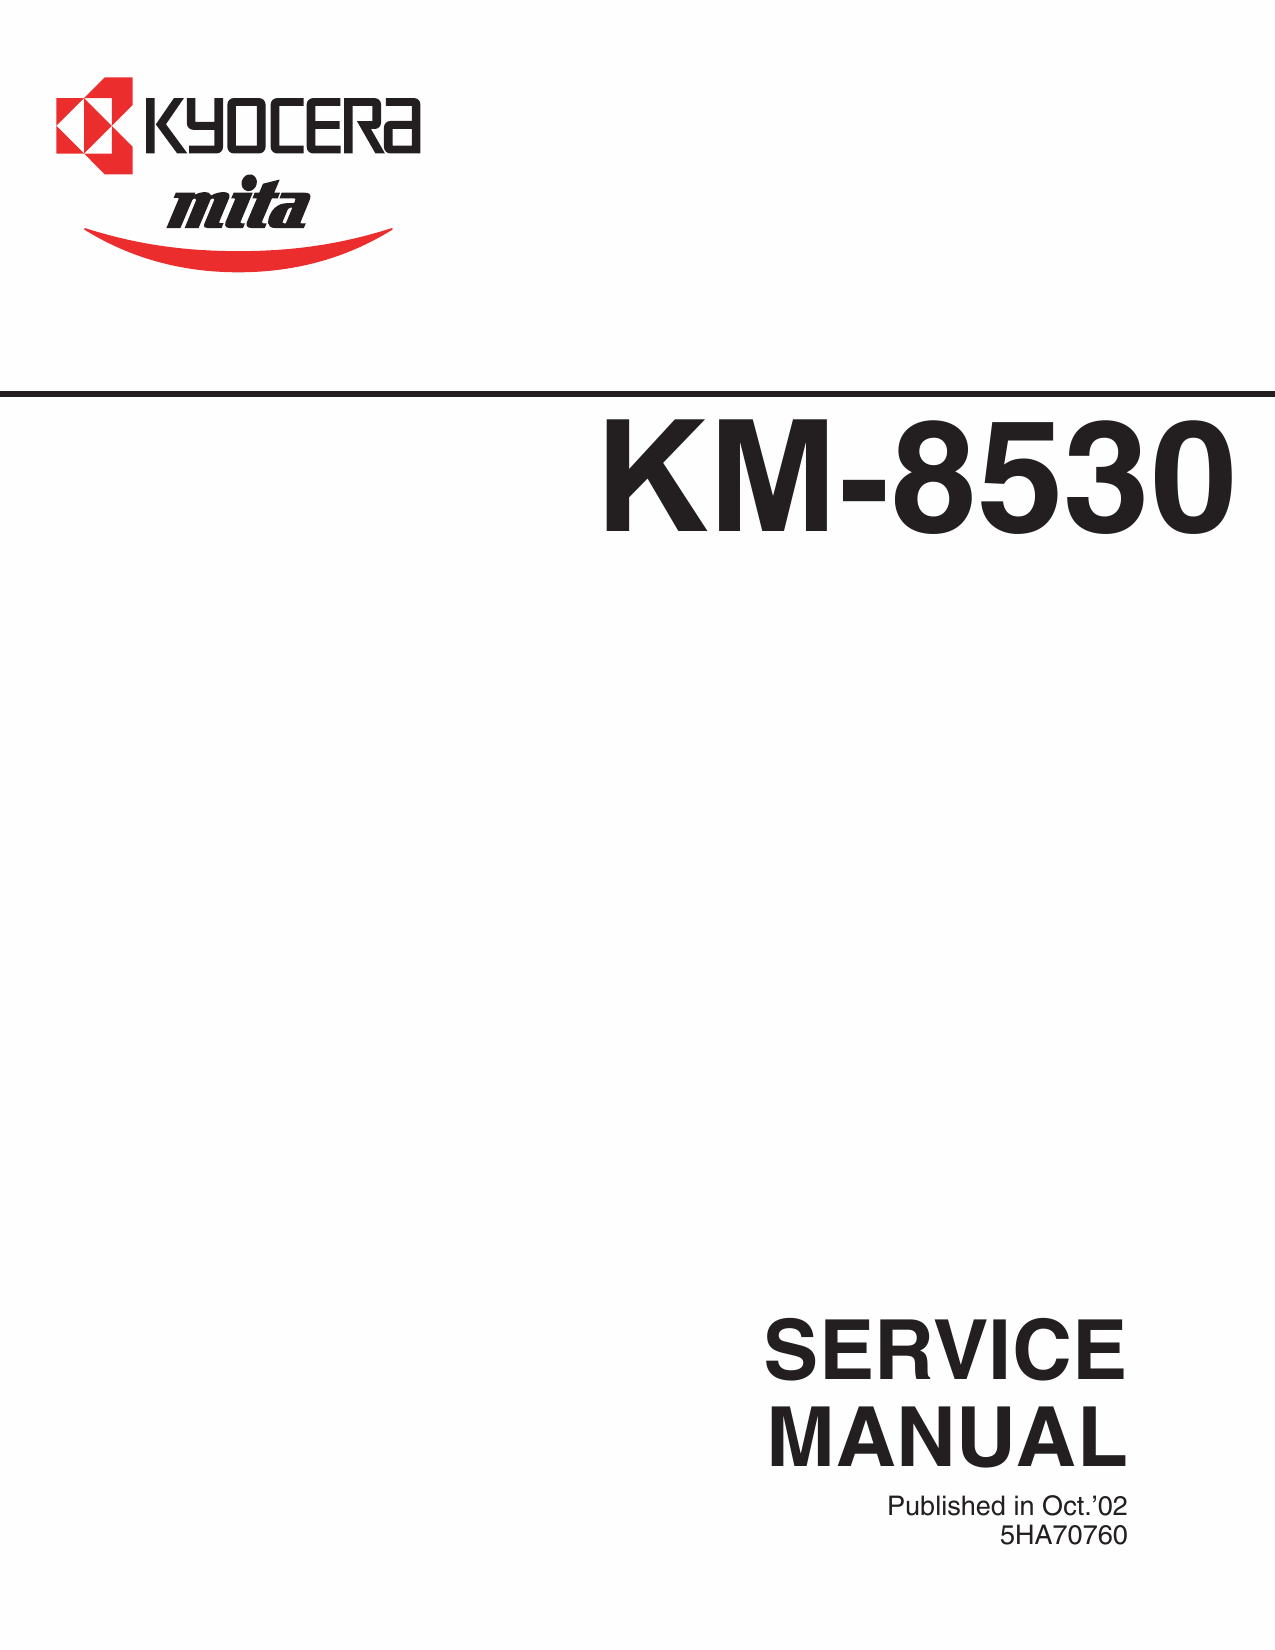 KYOCERA Copier KM-8530 Parts and Service Manual-1